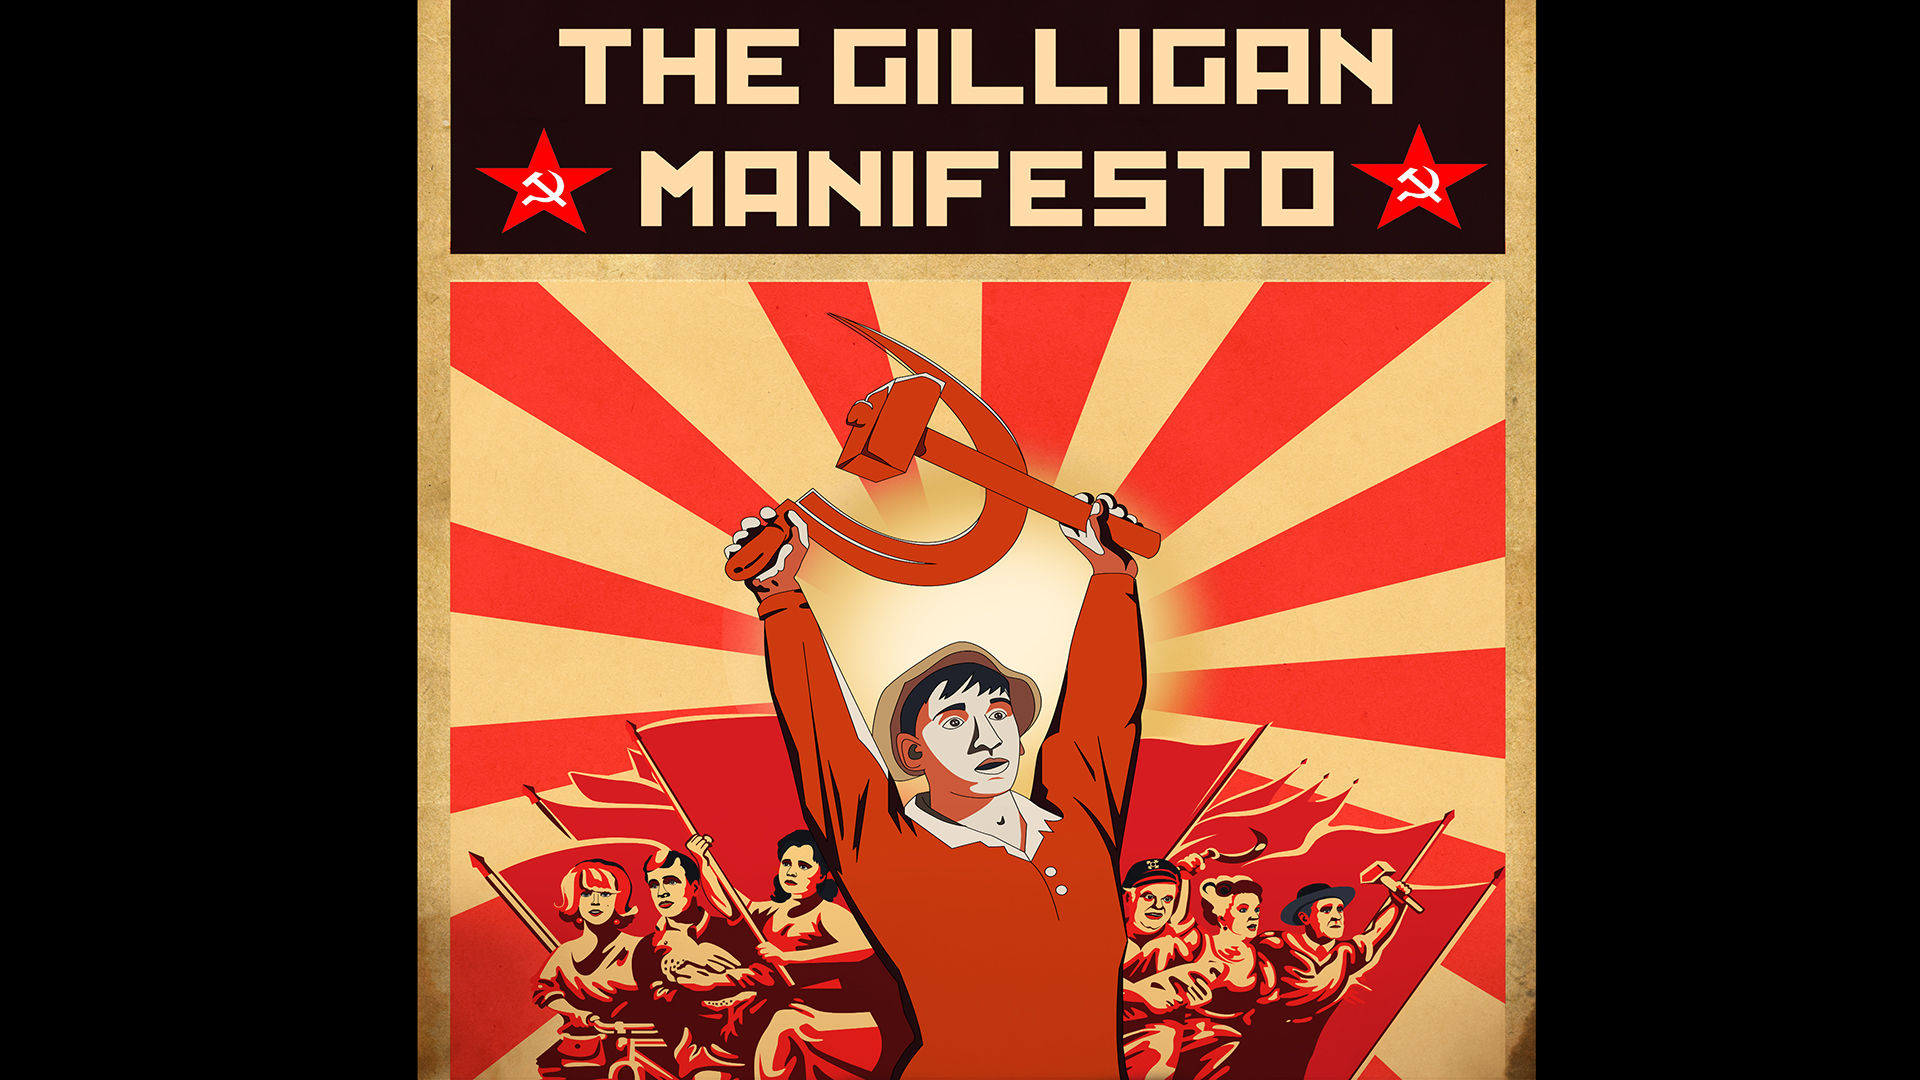 The Gilligan Manifesto